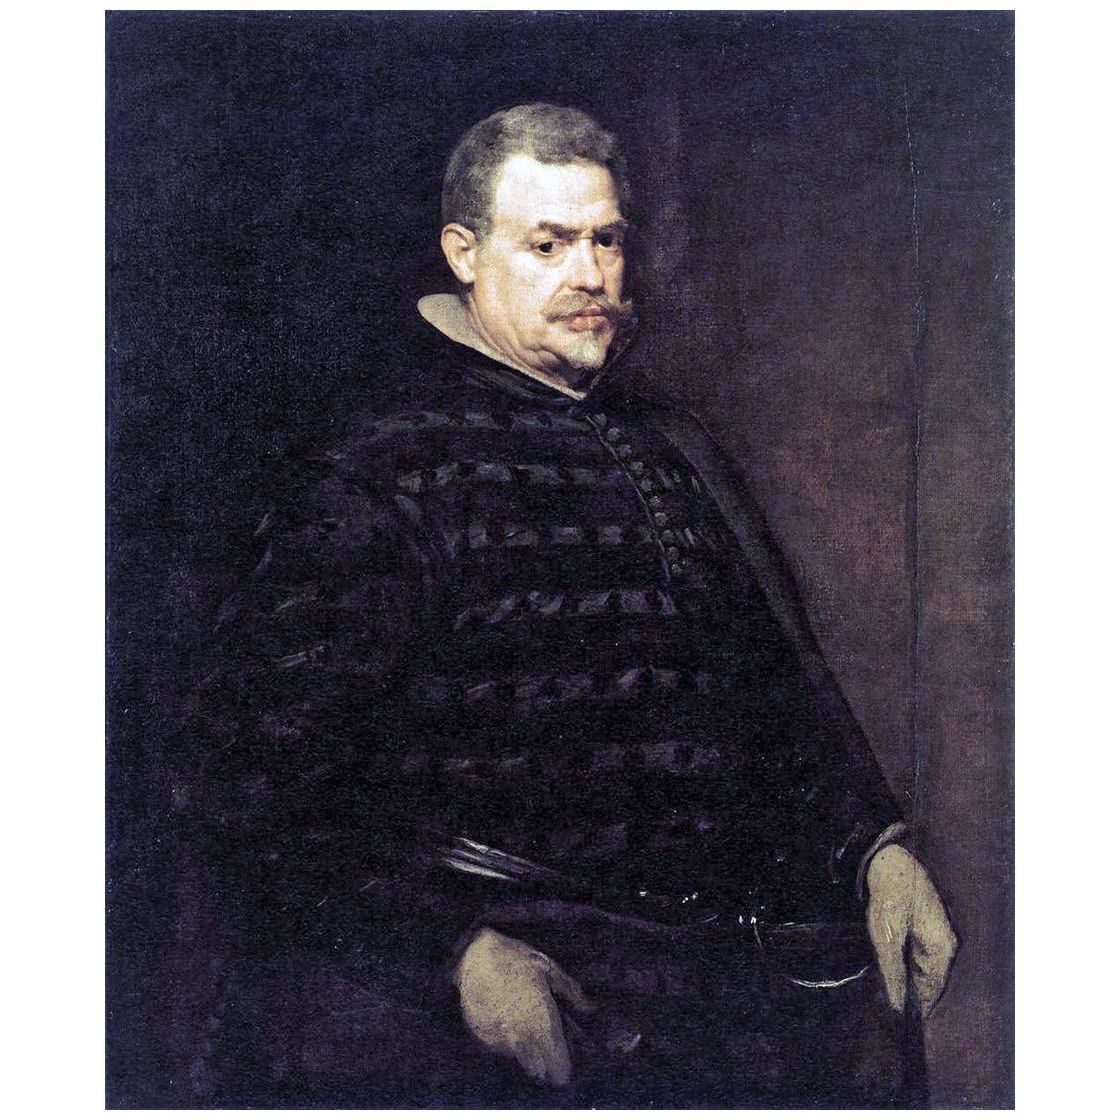 Diego Velazquez. Don Juan Mateos. 1632. Gemaldegalerie Alte Meister Dresden